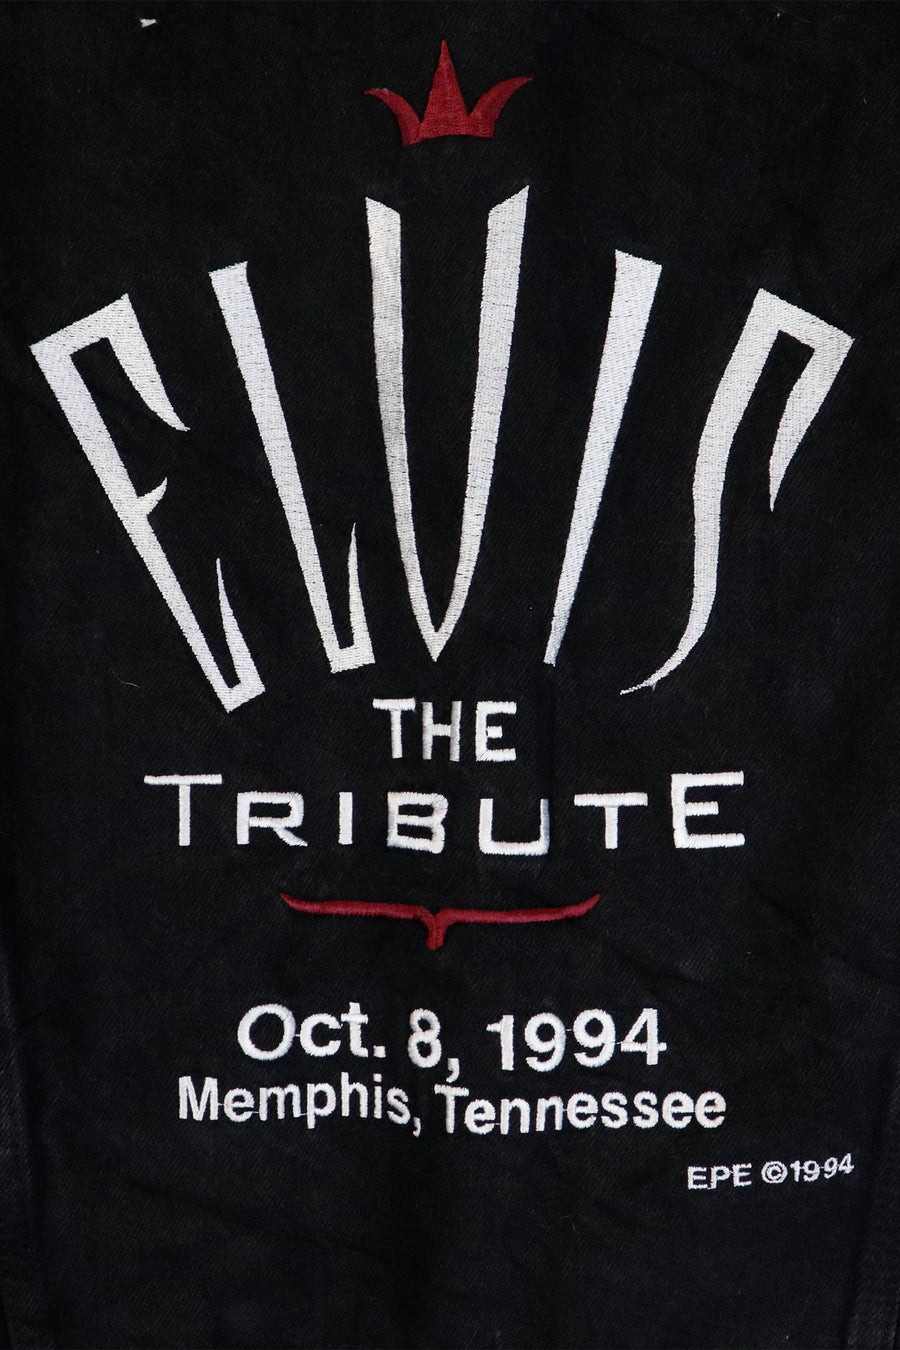 Vintage 1994 Elvis The Tribute  Denim Jacket Sz L